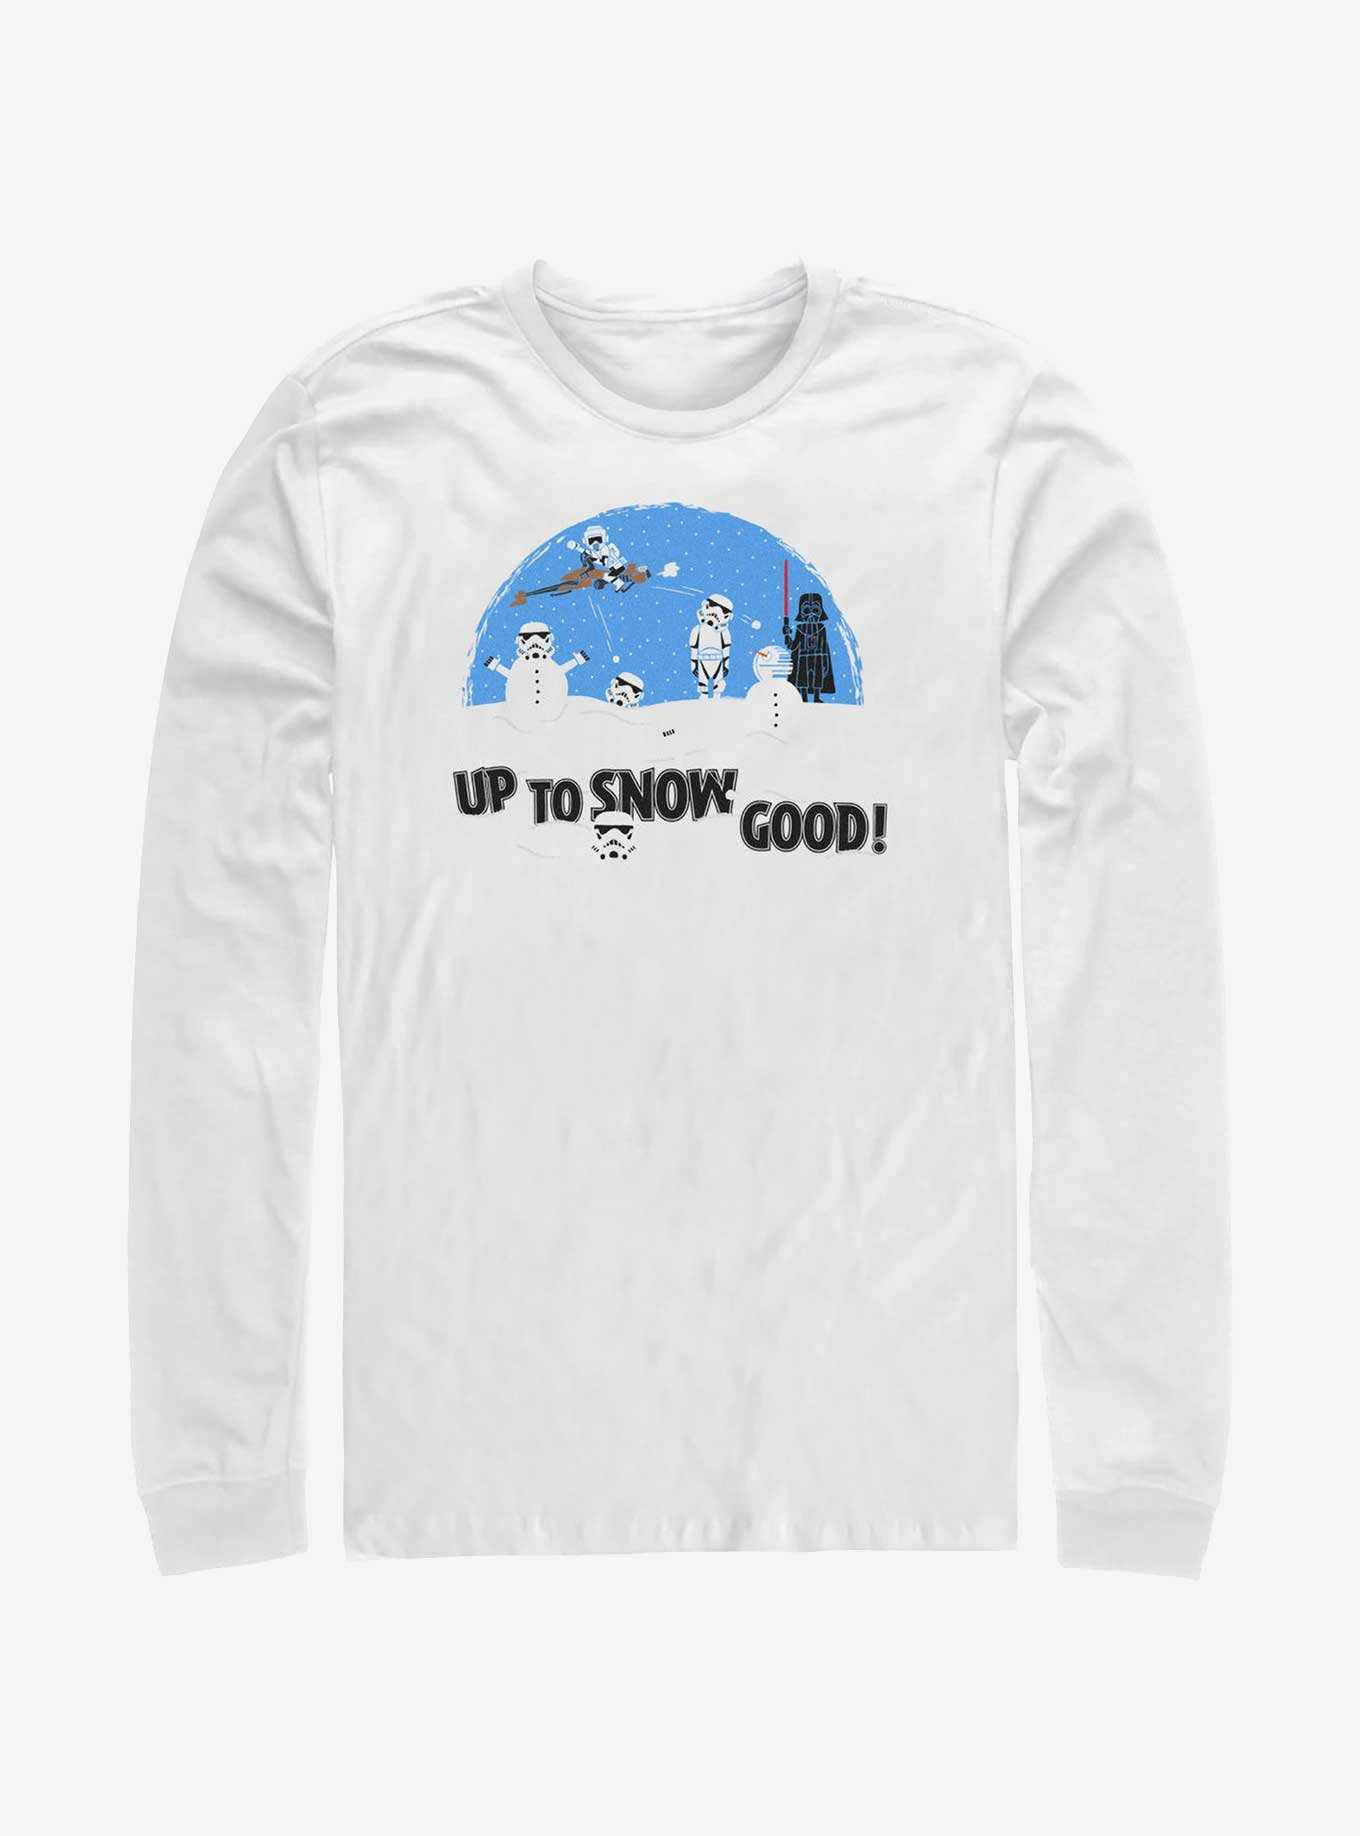 Star Wars Up To Snow Good Long-Sleeve T-Shirt, , hi-res